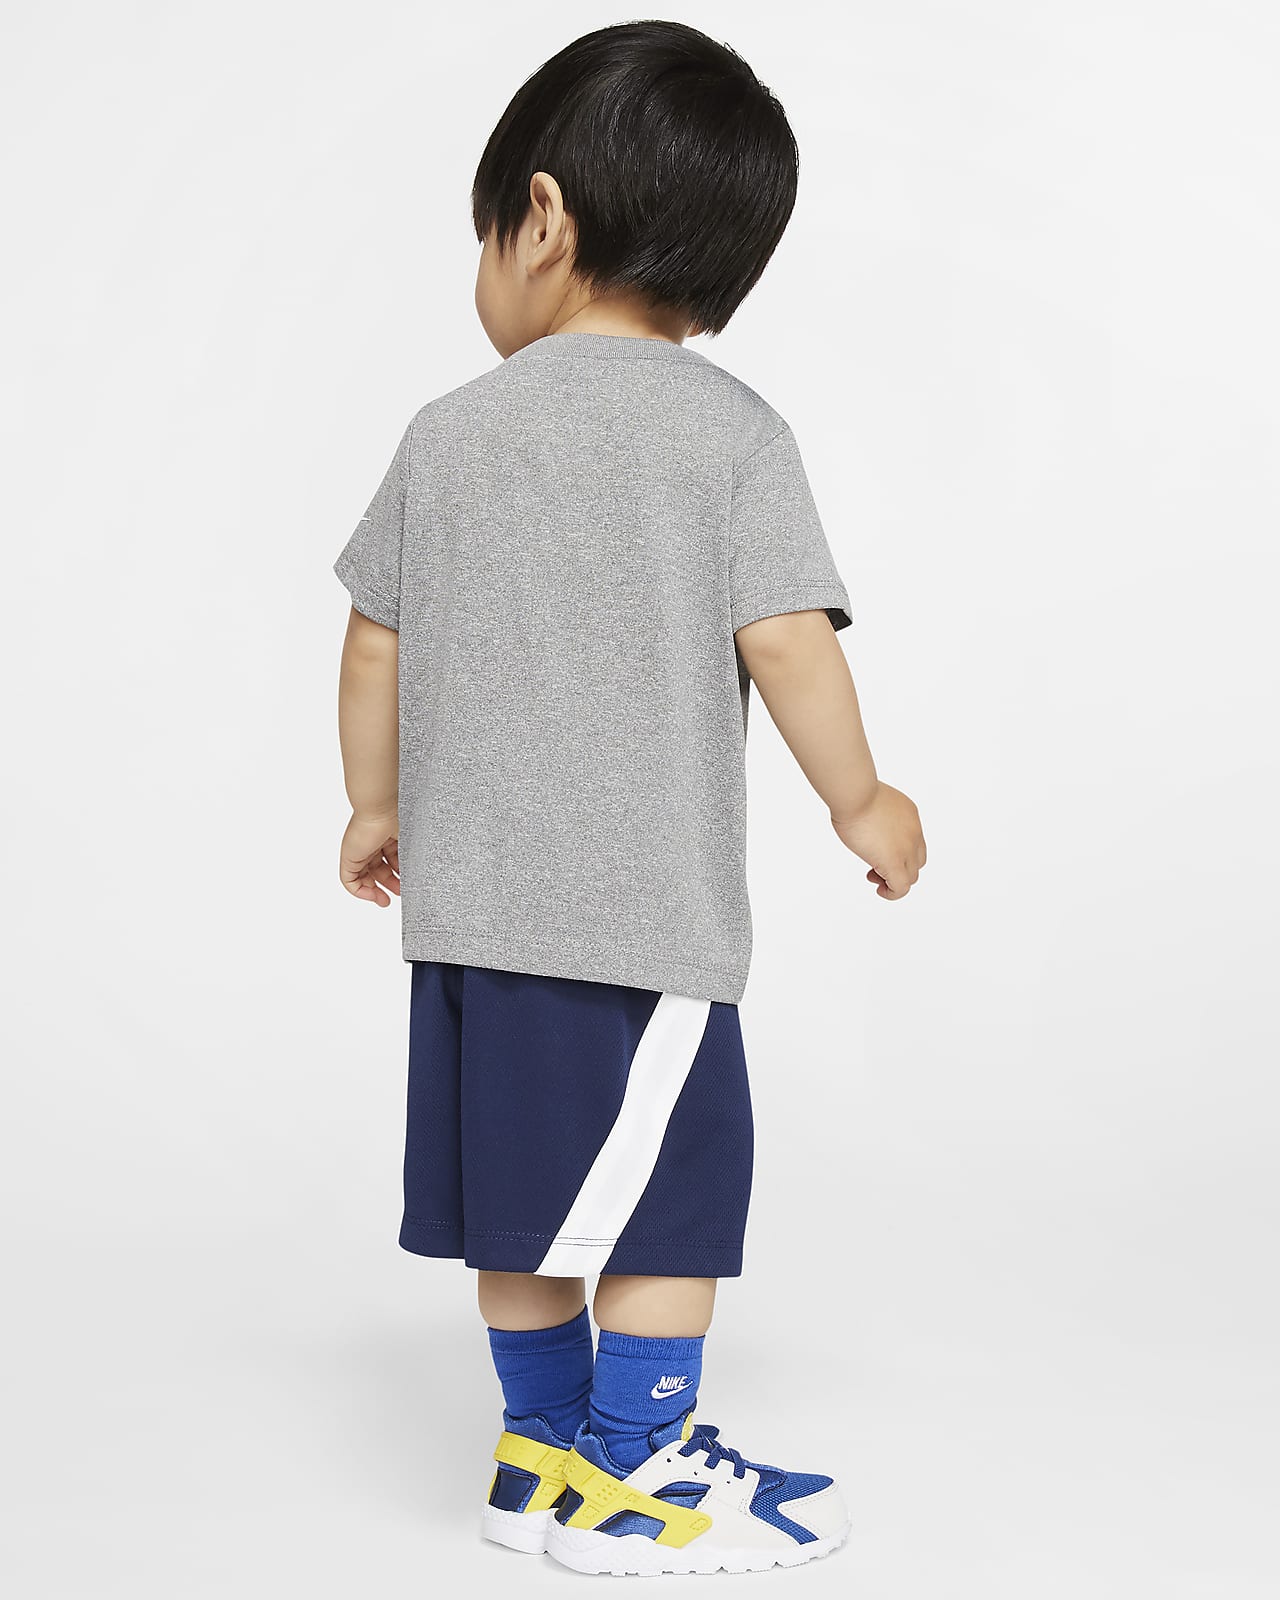 Nike Dri-FIT Baby (12-24M) T-Shirt Set. Shorts and